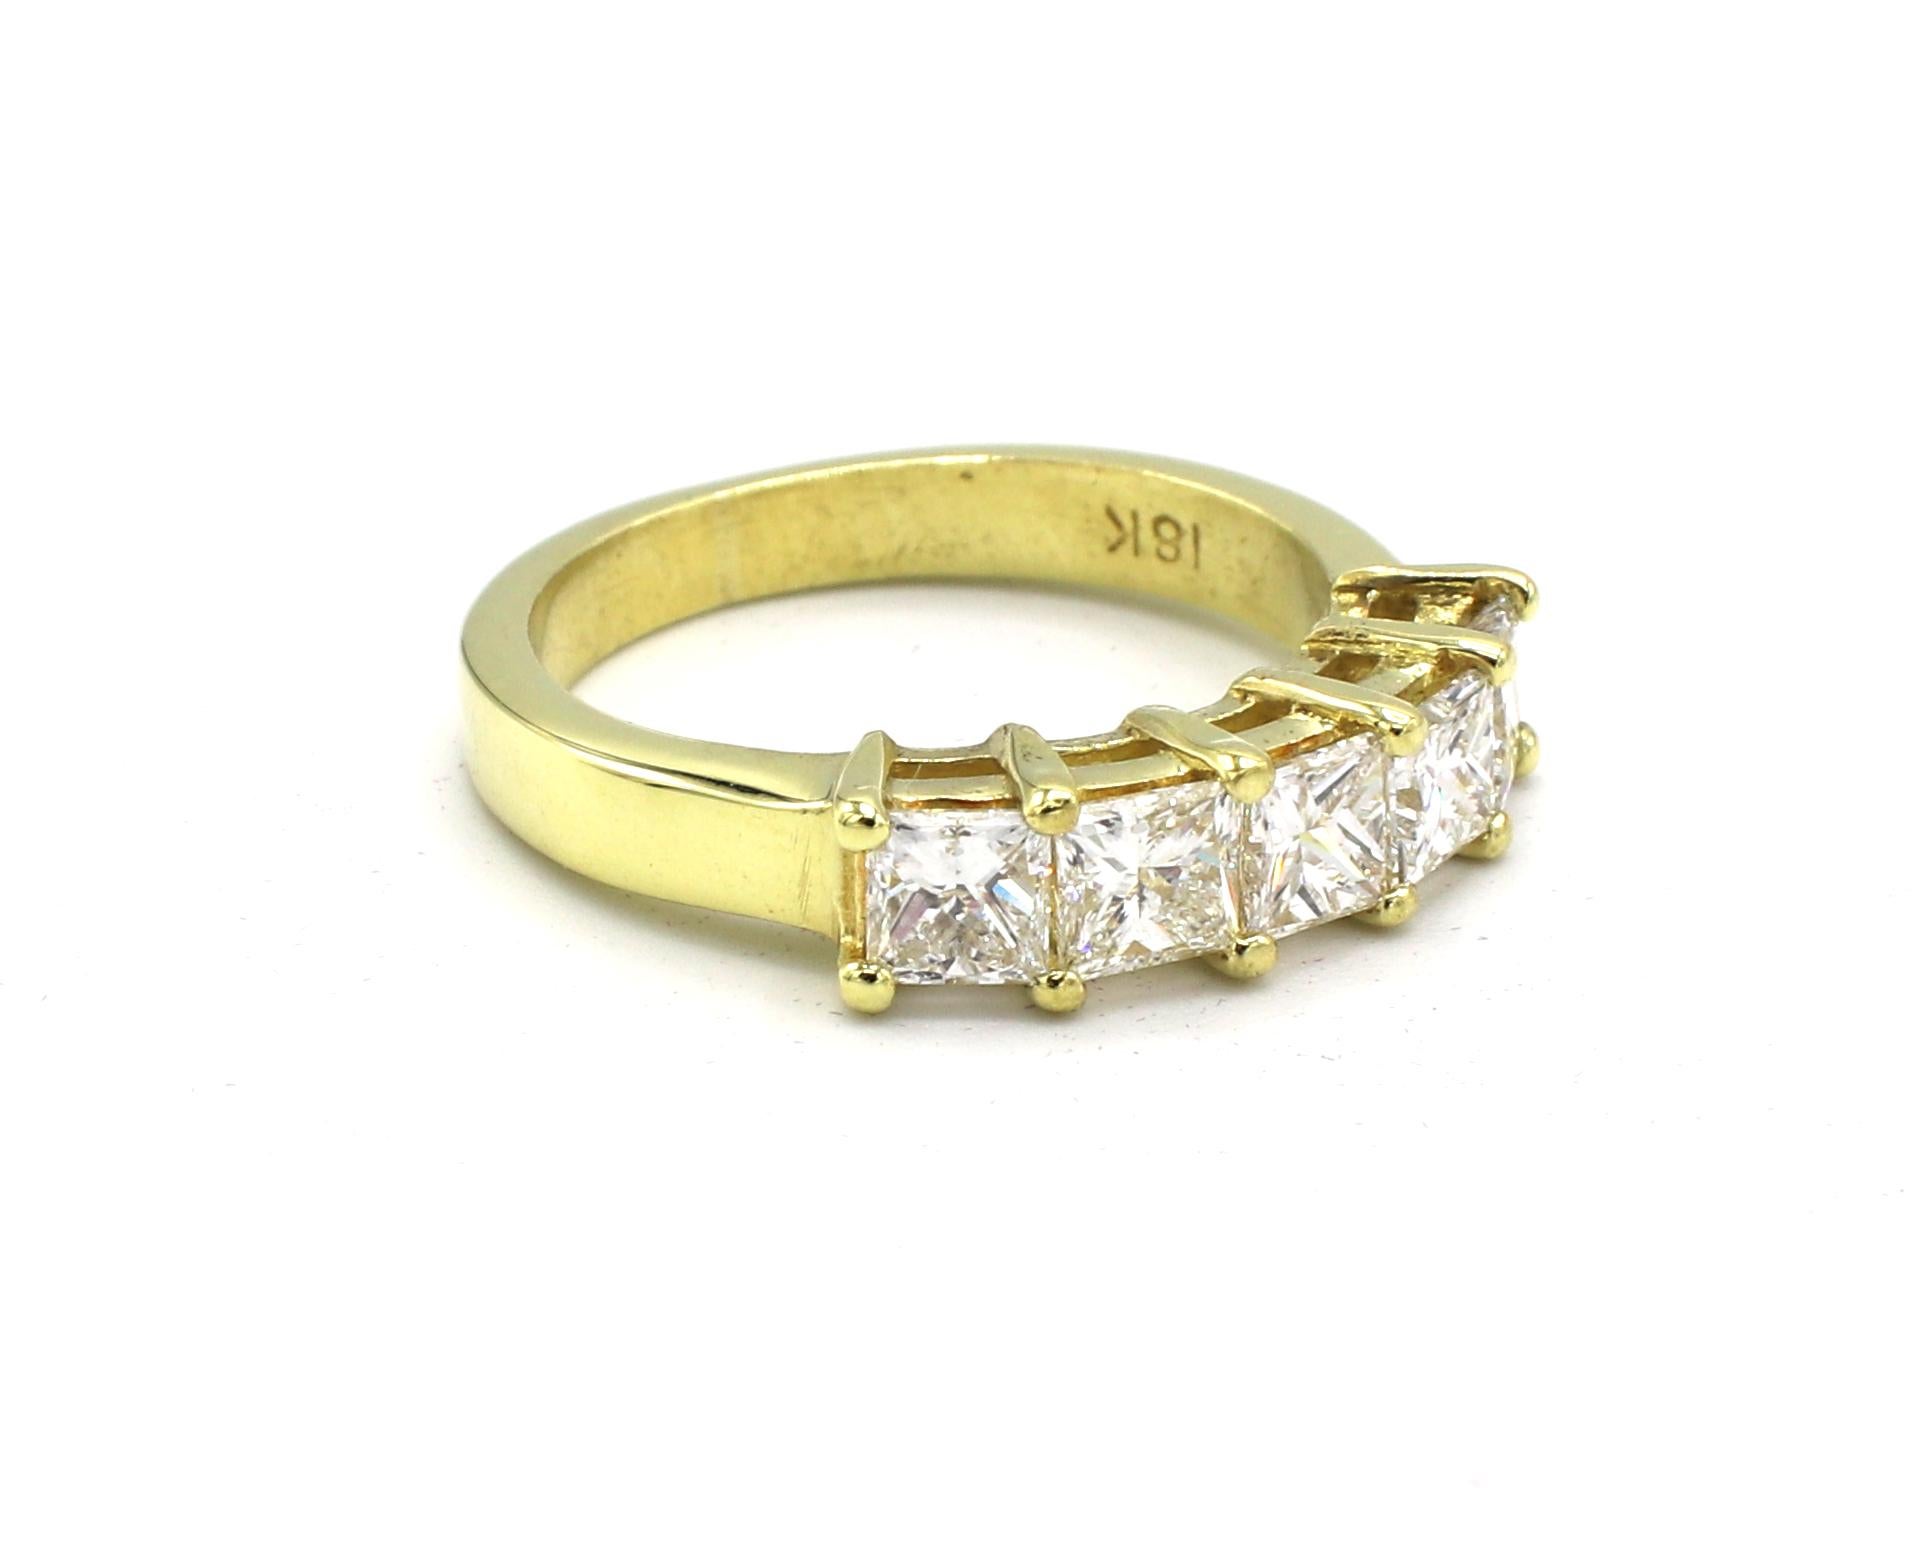 18 Karat Yellow Gold 1.25 Carat Princess Cut 5 Stone Diamond Wedding Band Ring 
Metal: 18k yellow gold
Weight: 4.34 grams
Diamonds: 5 princess cut diamonds, approx. 1.25 CTW G-H VS
Size: 5 (US)
Band is 2.5MM at base
